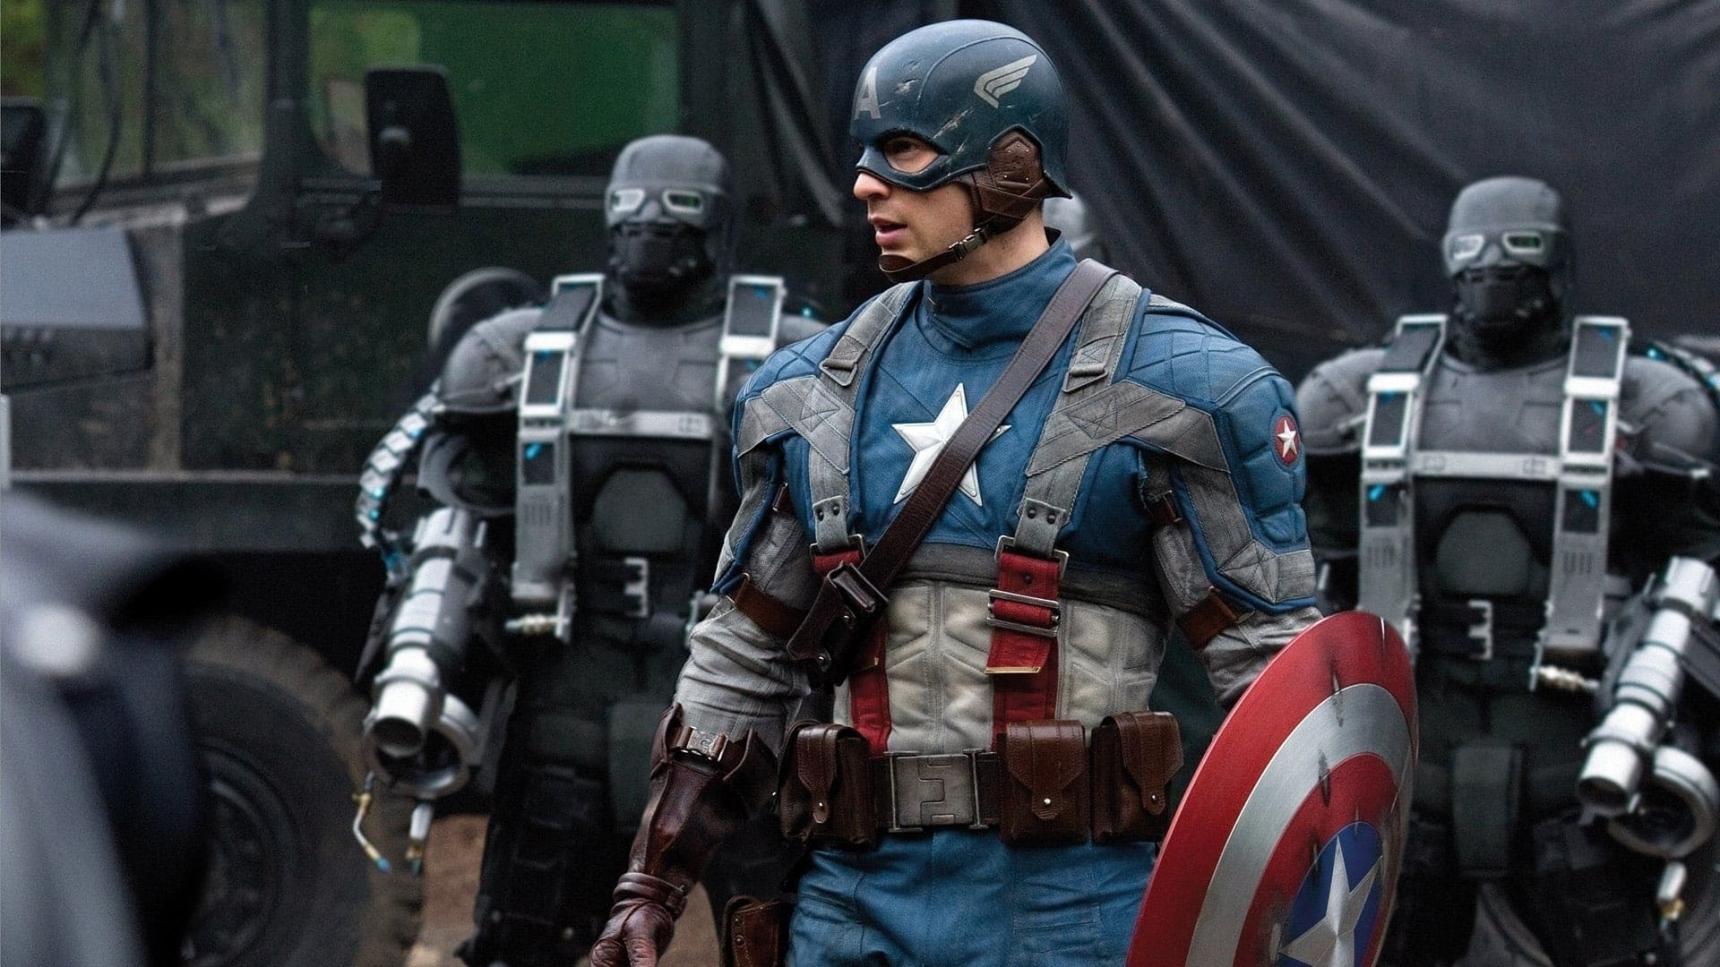 Fondo de pantalla de la película Capitán América: El Primer Vengador en Cliver.tv gratis